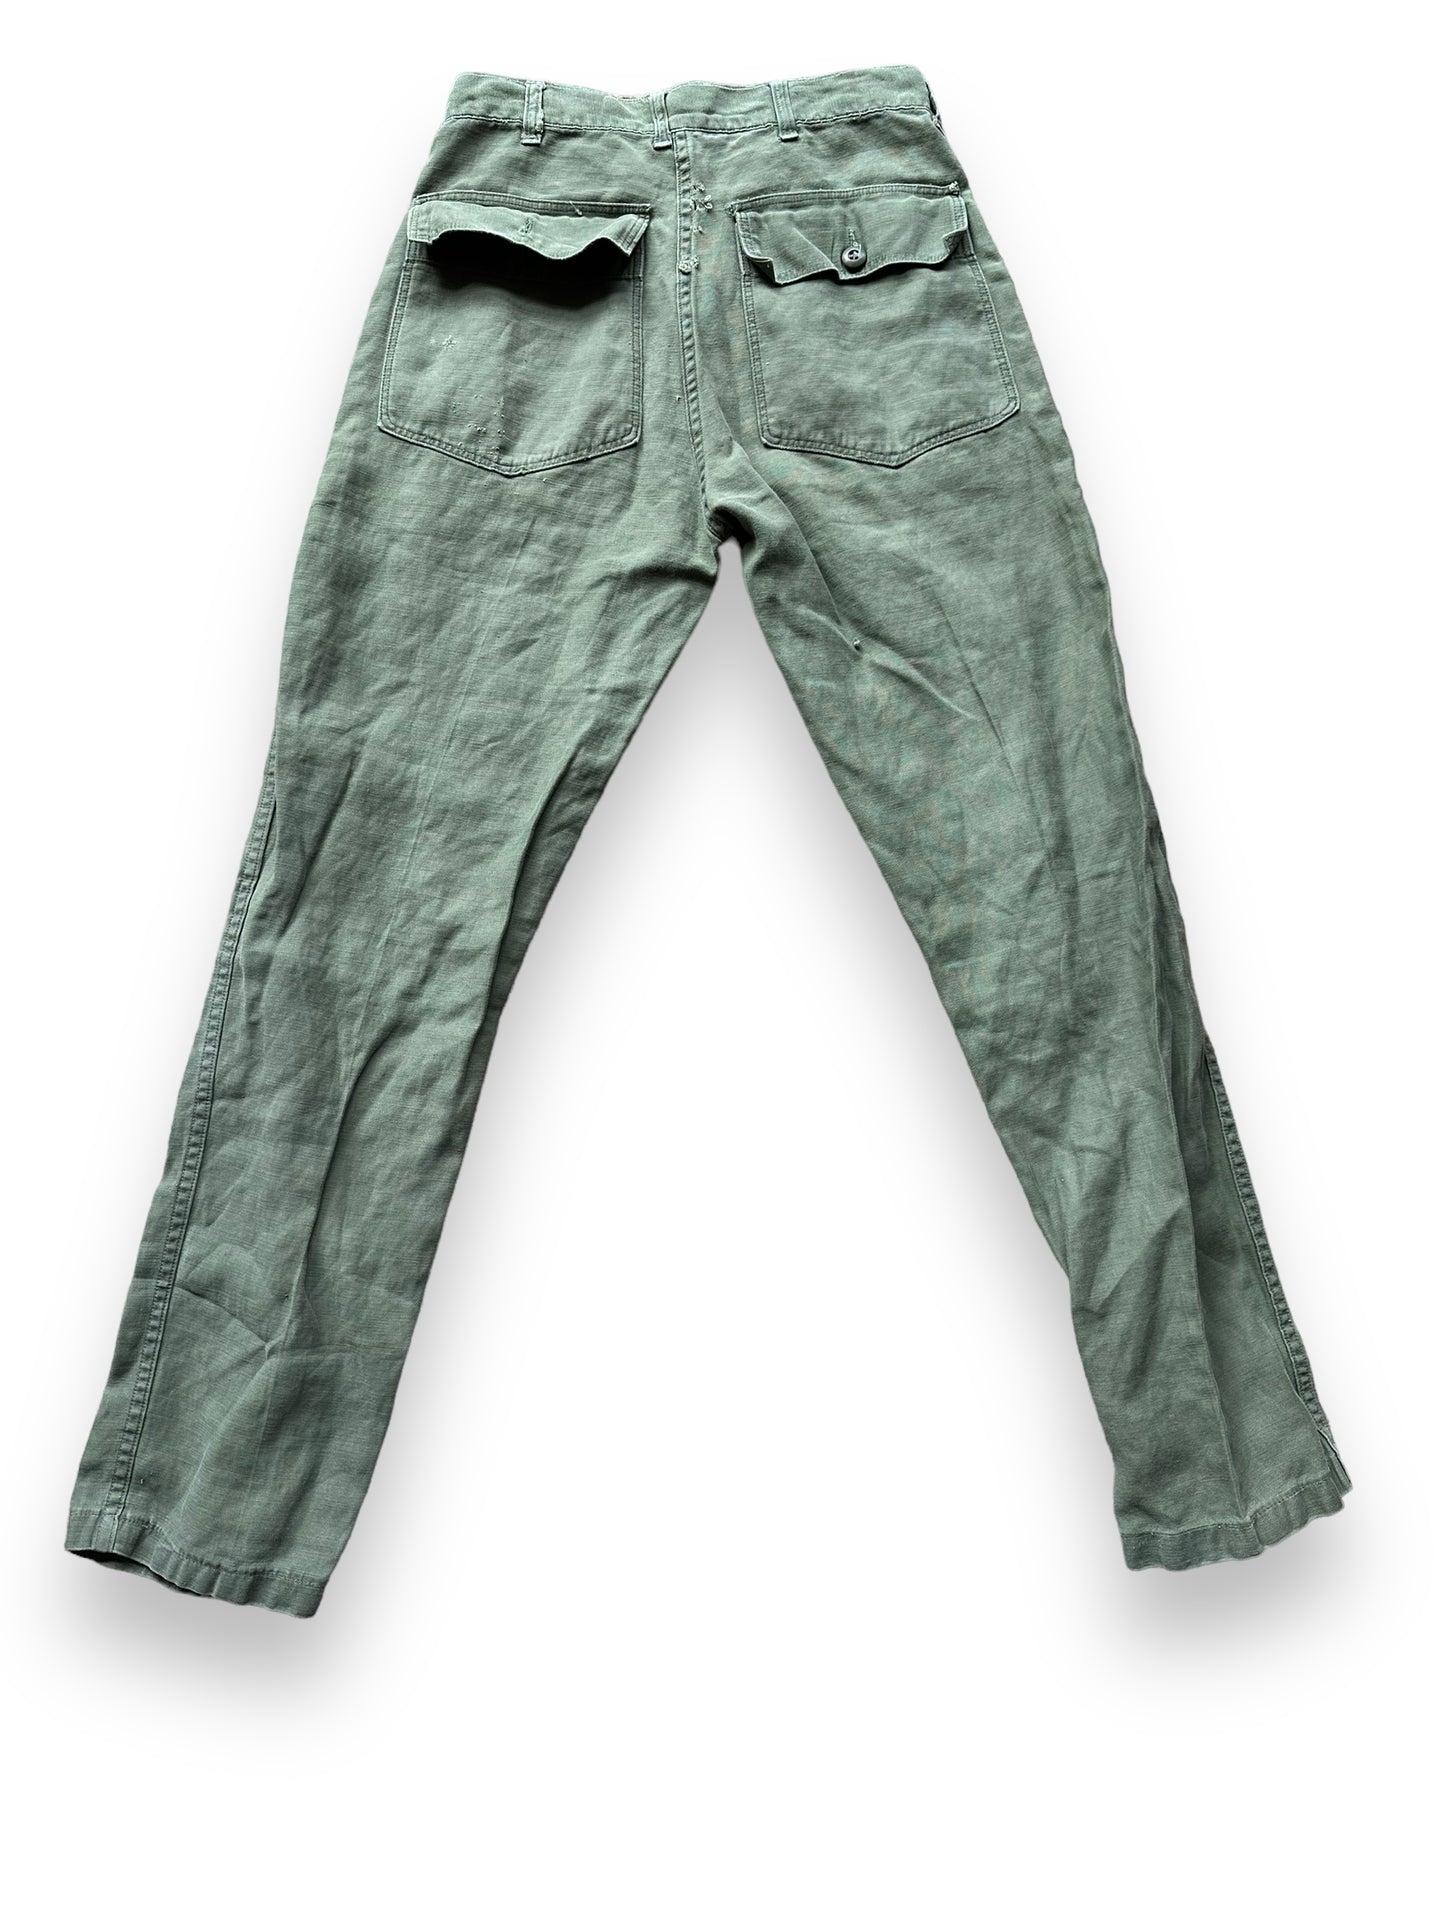 Rear View of Vintage Sateen OG-107's W30 L32.5 | Vintage Viet Nam Era Baker Pants Seattle | Barn Owl Vintage Workwear